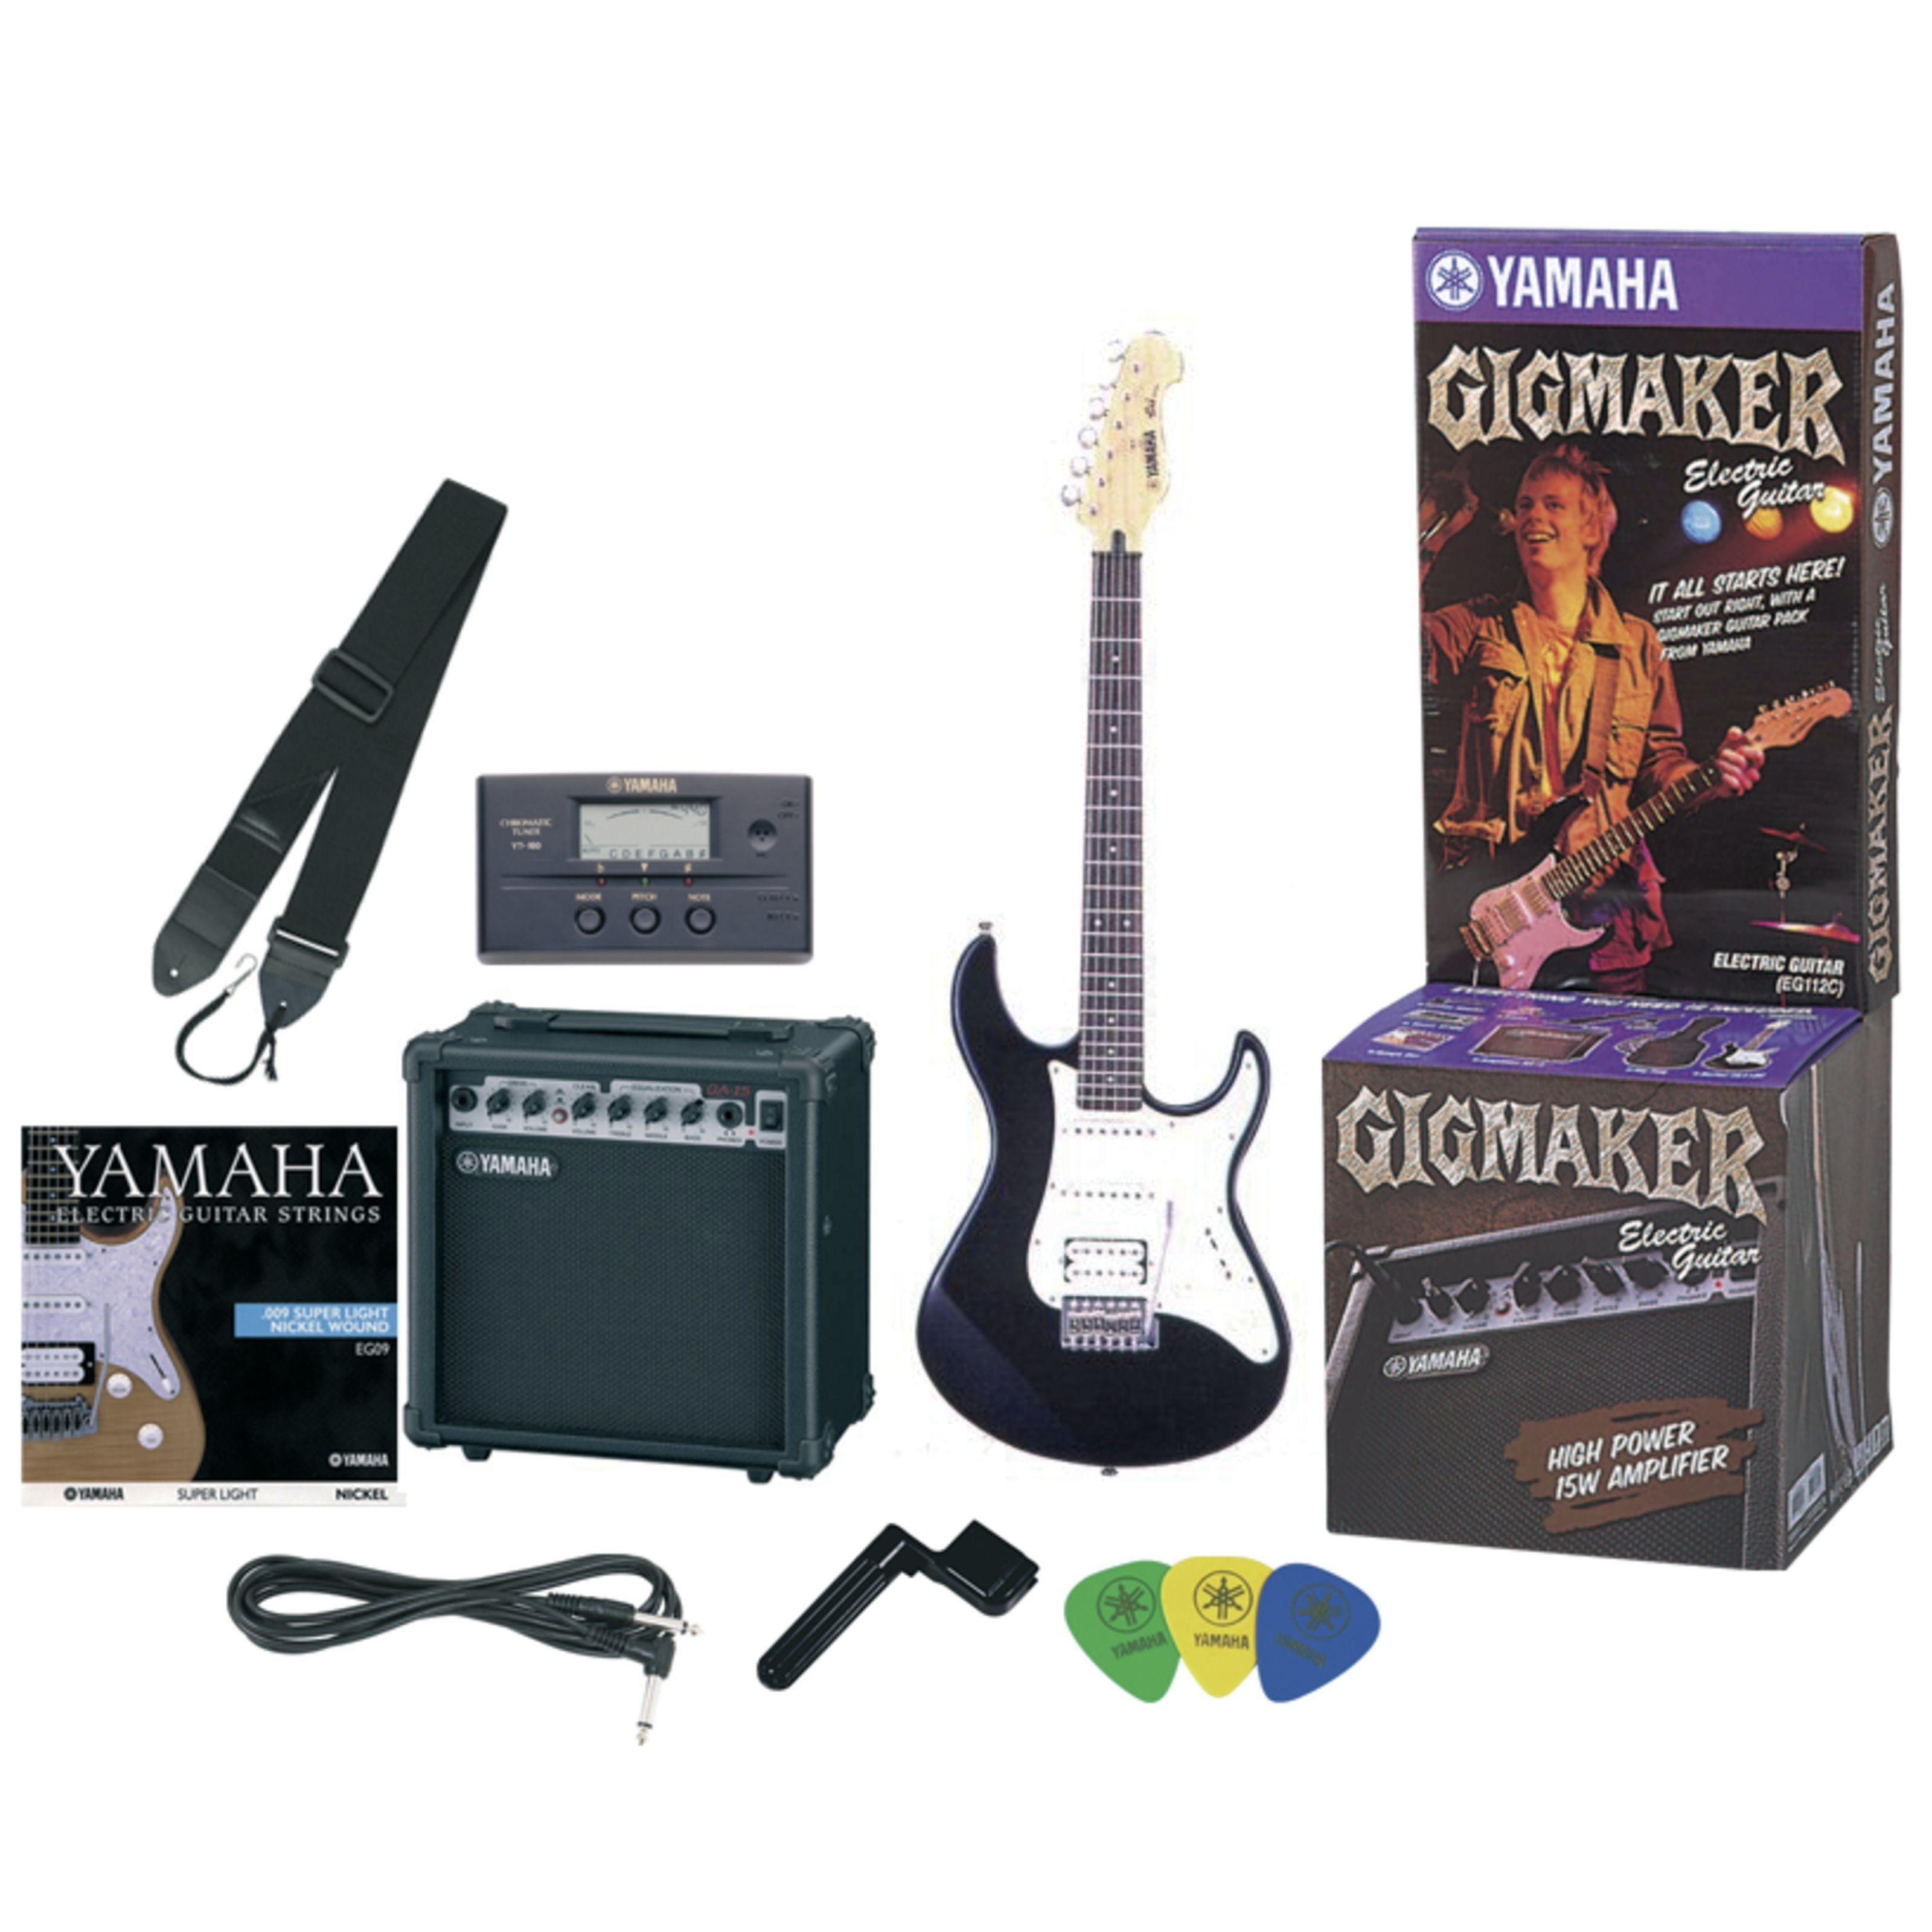 Yamaha E-Gitarre, E-Gitarren, E-Gitarren-Sets, EG-112GP Gigmaker Paket mit Amp, Tuner u.a. Zubehör - E-Gitarren